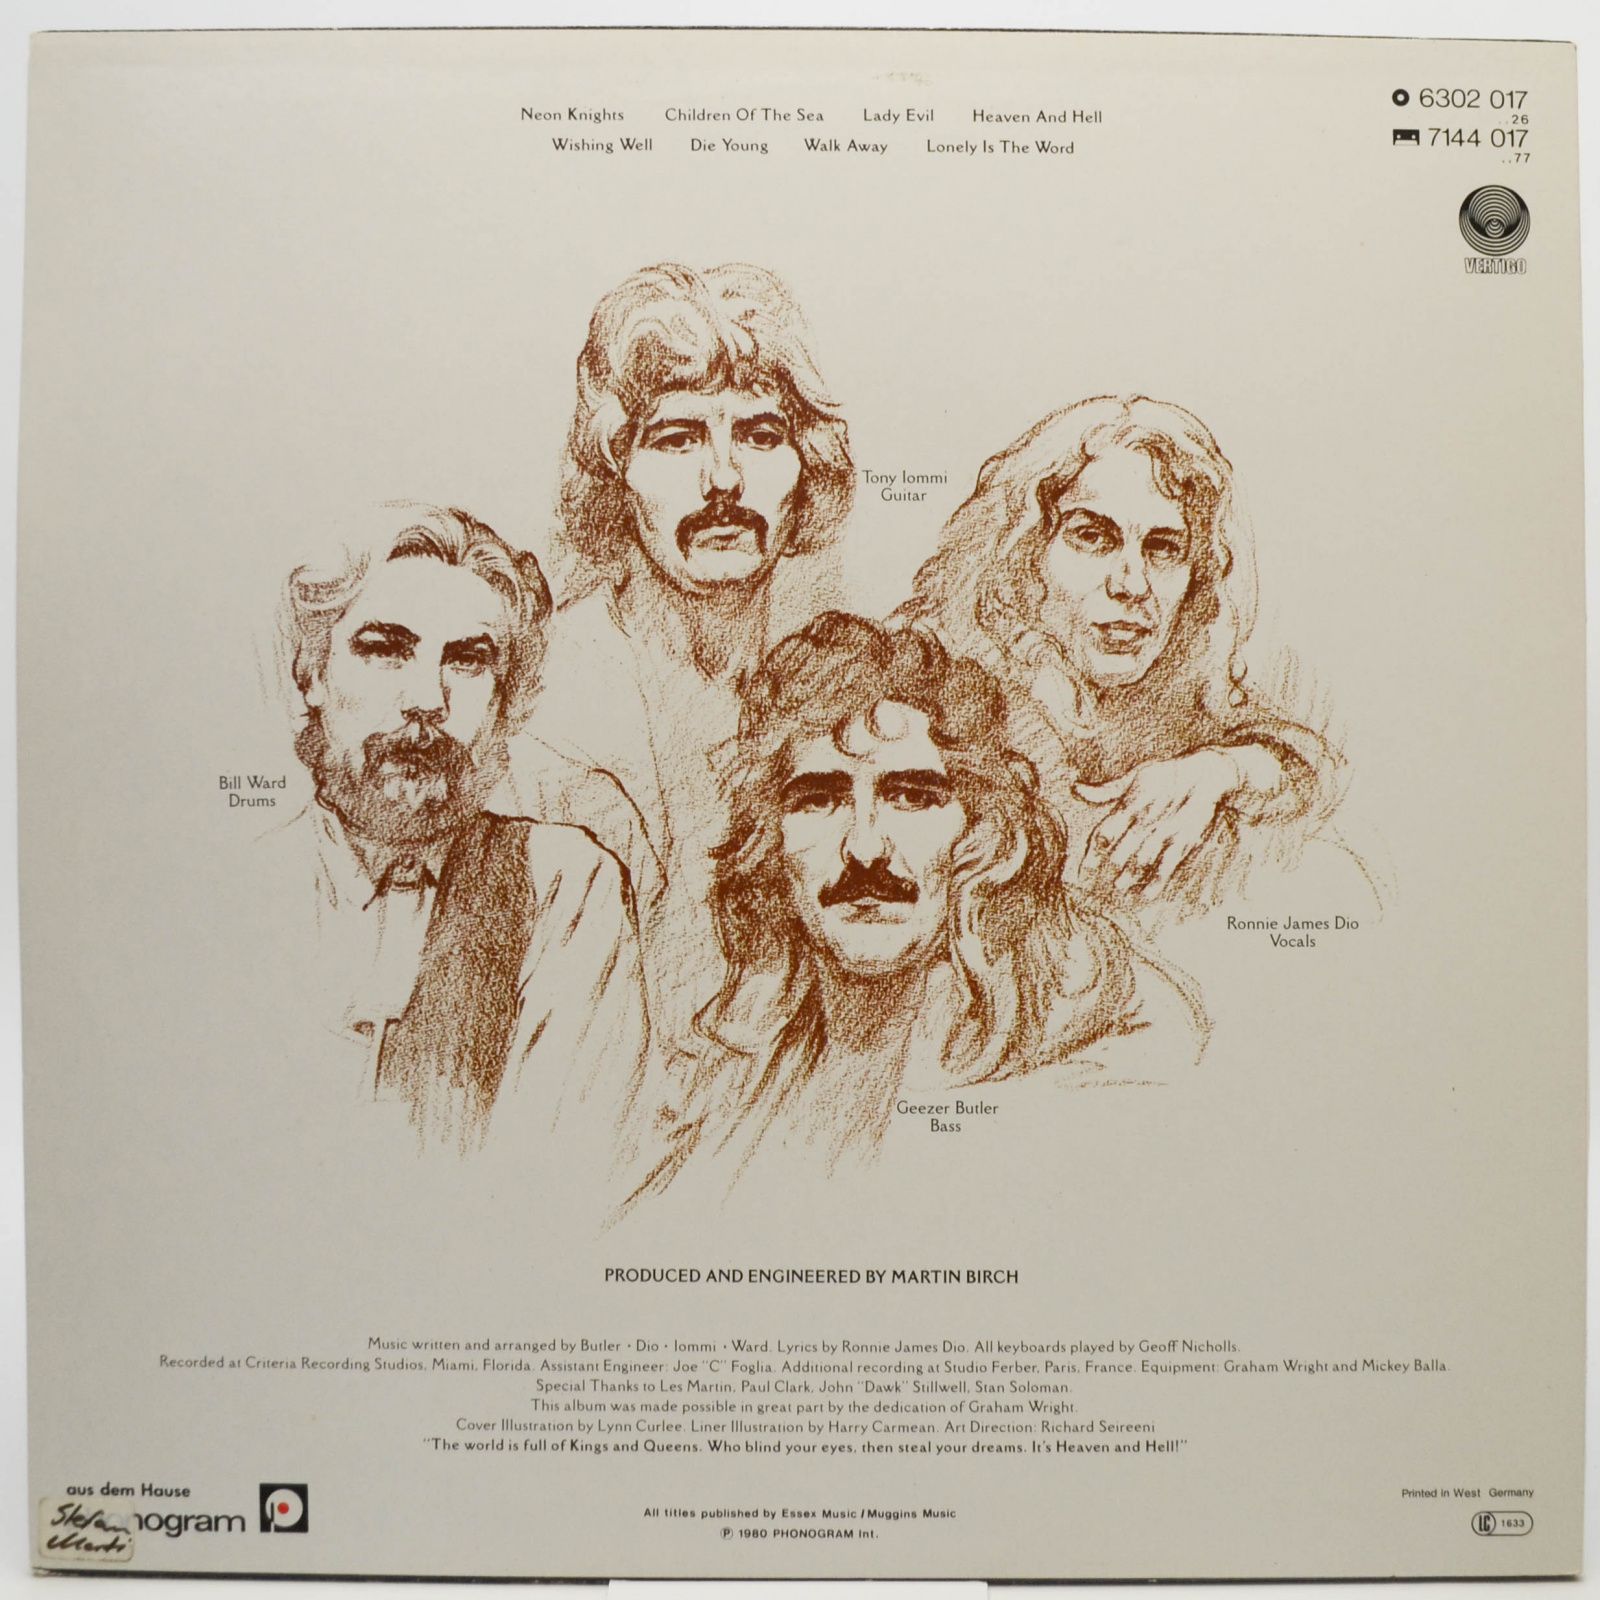 Black Sabbath — Heaven And Hell, 1980